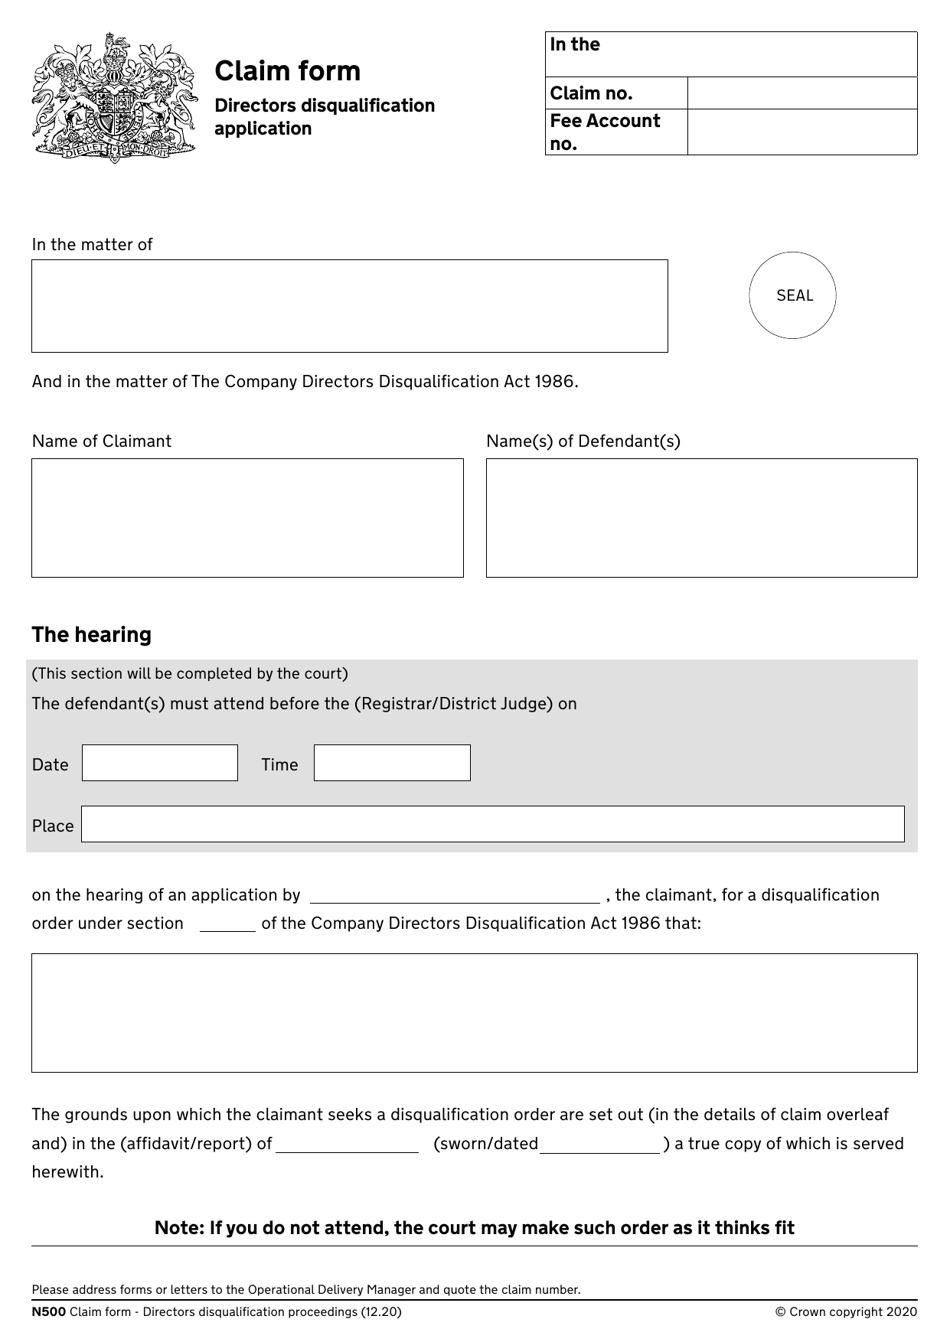 Form N500 Claim Form (Directors Disqualification Application) - United Kingdom, Page 1